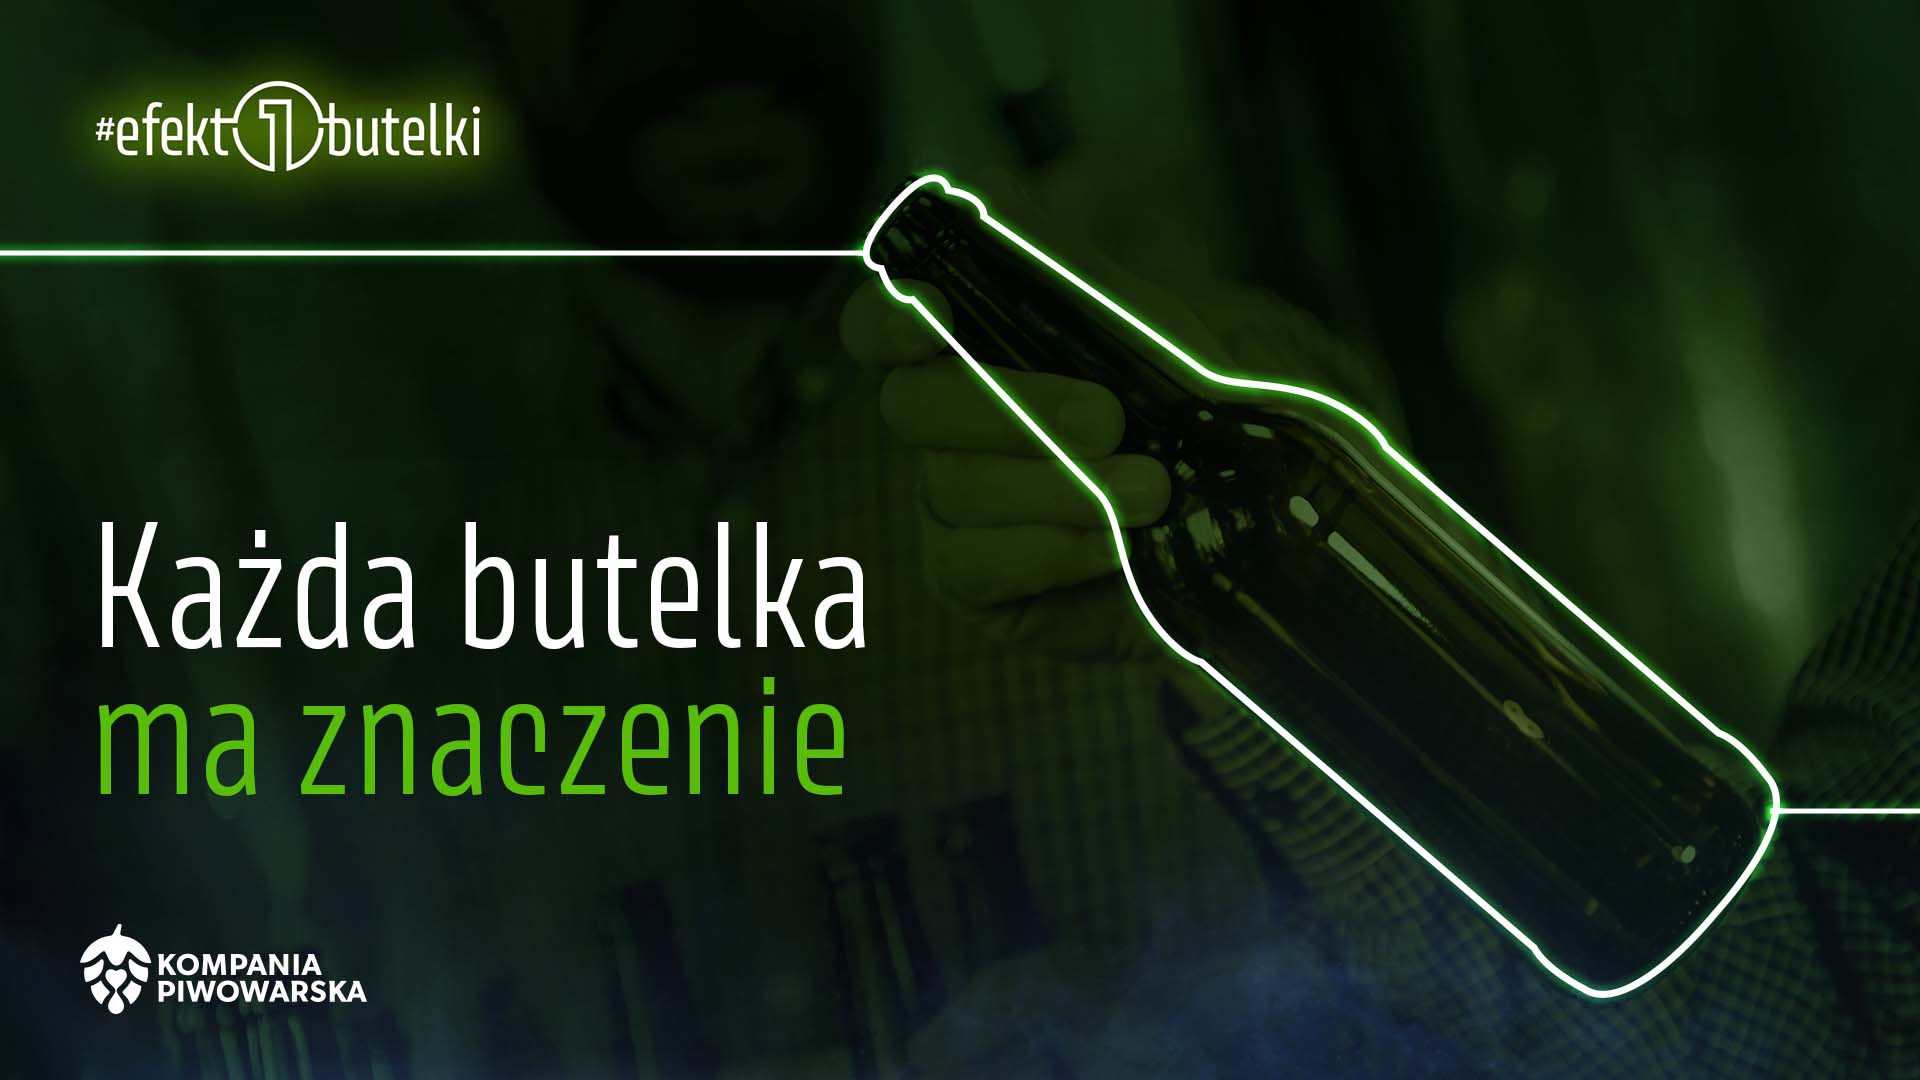 Kompania Piwowarska encourages to redeem returnable bottles within the new “Efekt1butelki” campaign